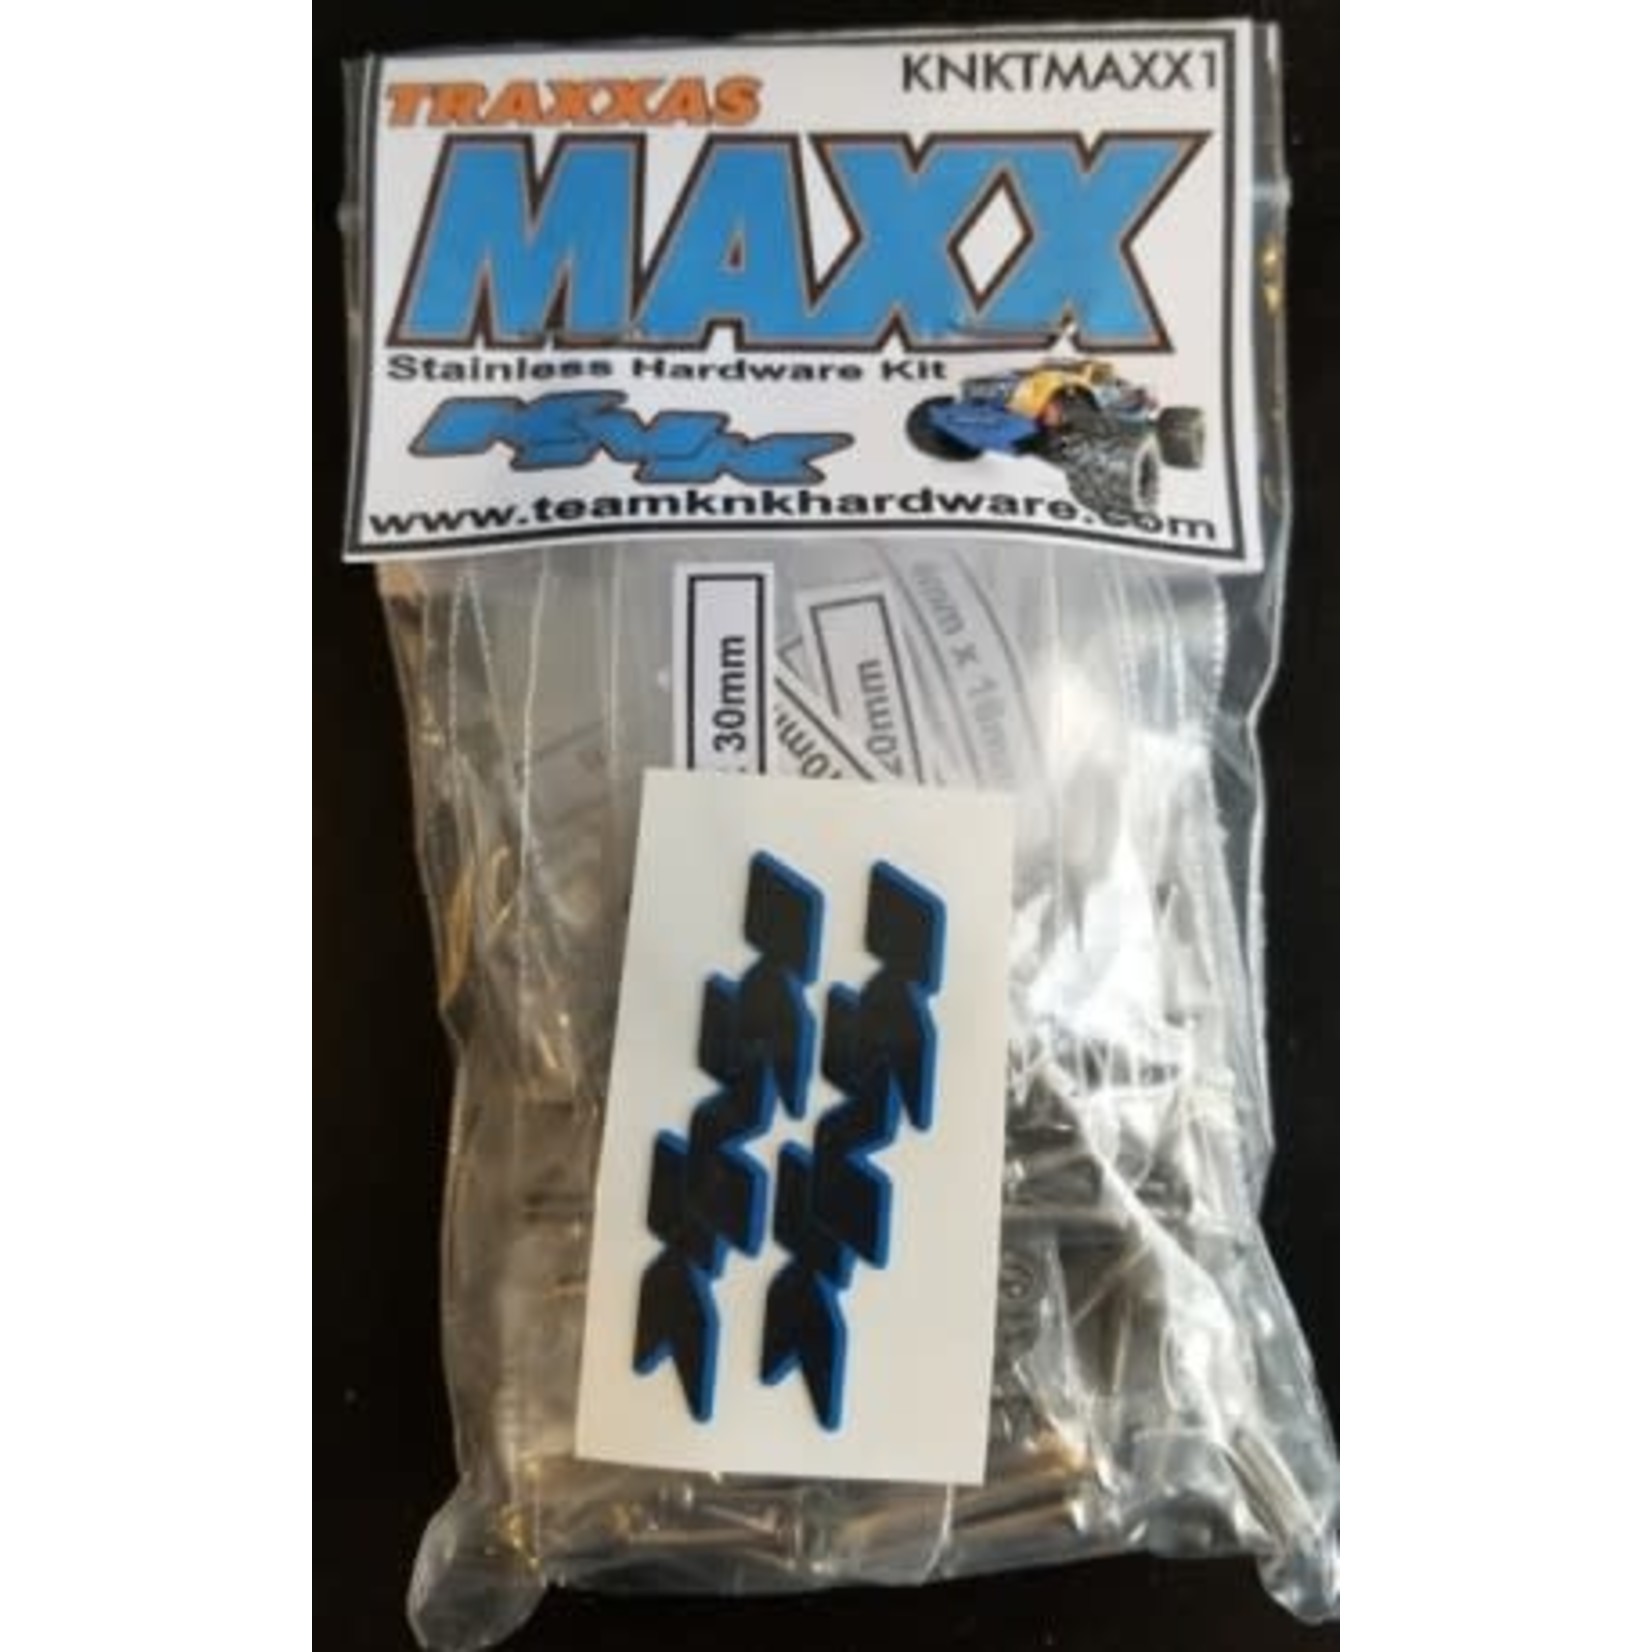 Team KNK Team KNK Traxxas Maxx Stainless Hardware Kit #KNKTMAXX1